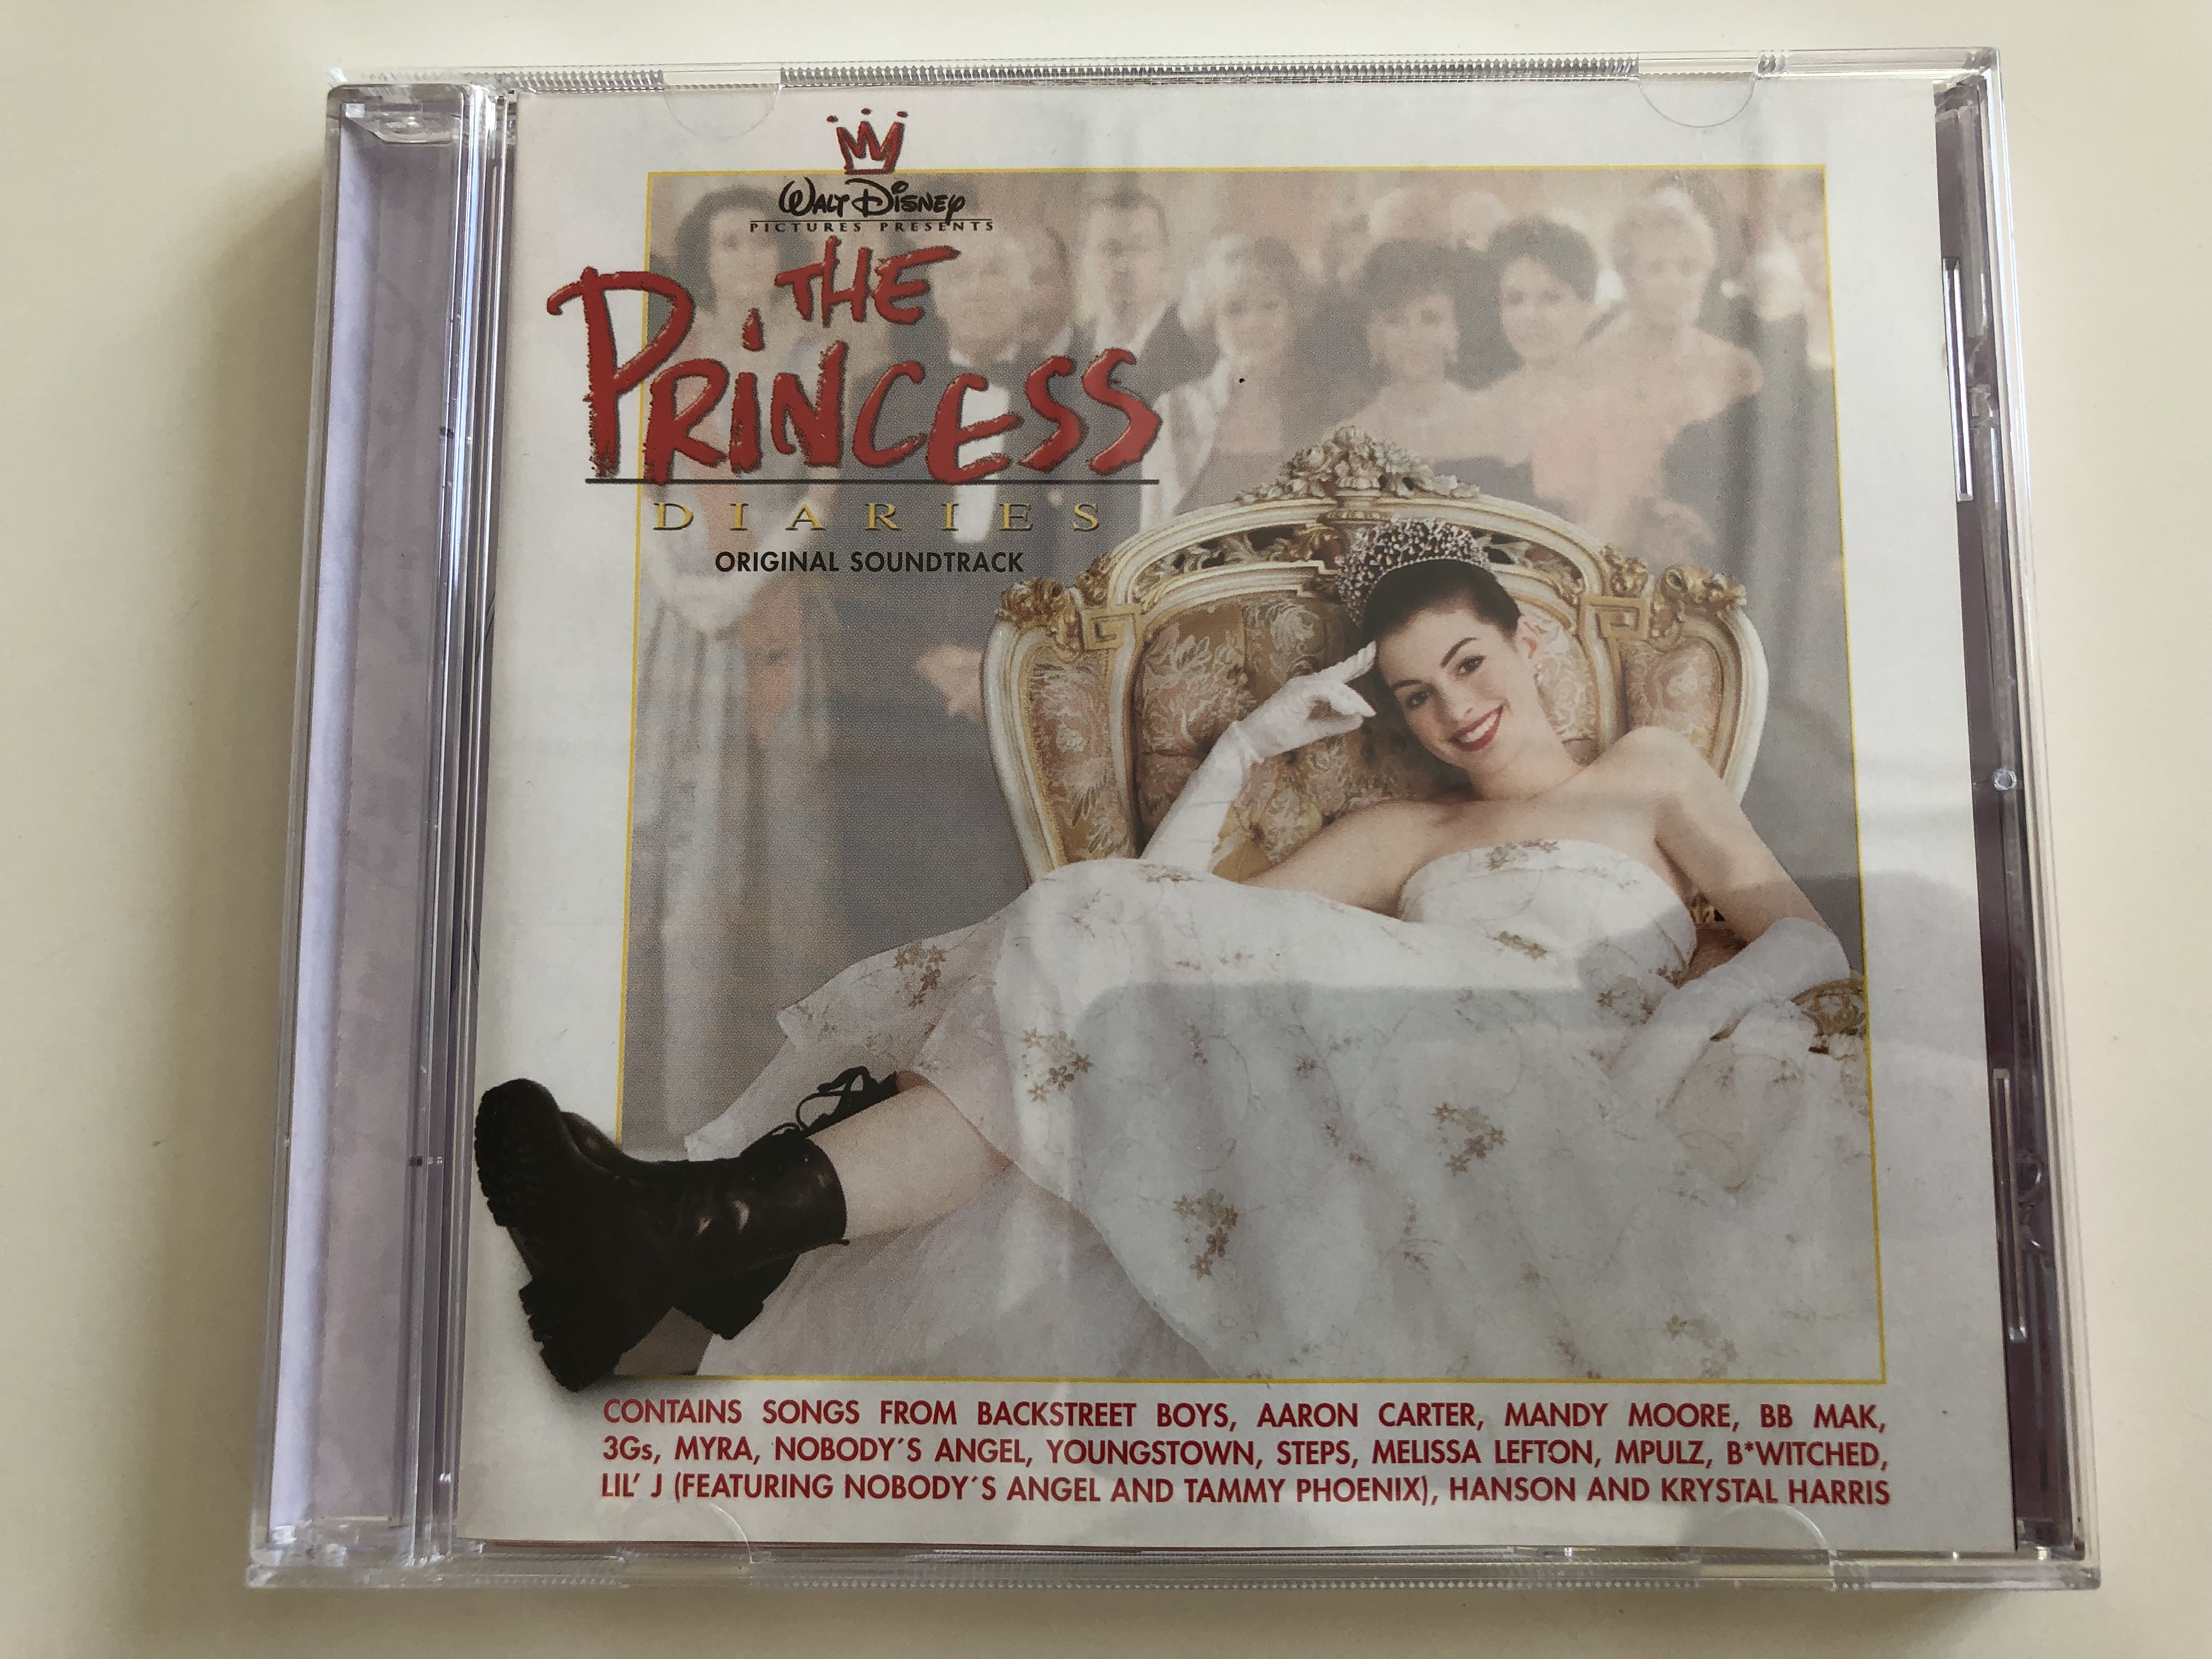 the-princess-diaries-original-soundtrack-backstreet-boys-aaron-carter-mandy-moore-hanson-krystal-harris-audio-cd-2001-walt-disney-records-ca-91521-1-.jpg